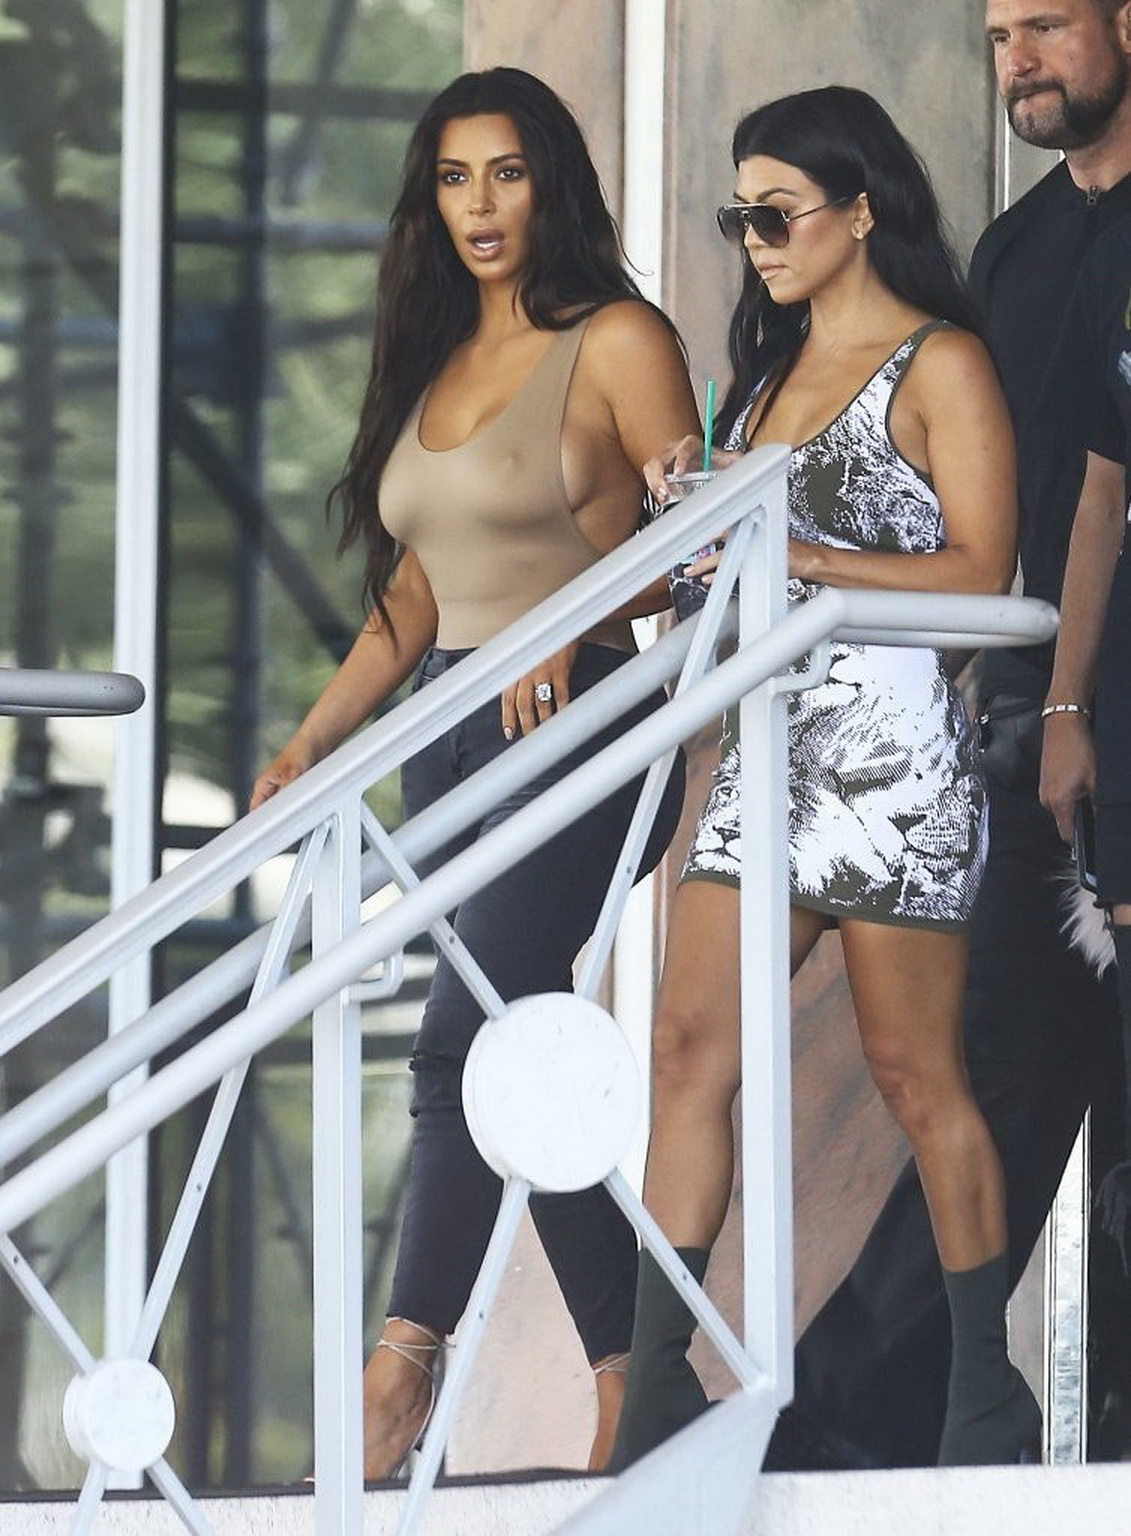 Kim Kardashian braless pokies in see through top out in Miami 12x HQ photos 5.jpg